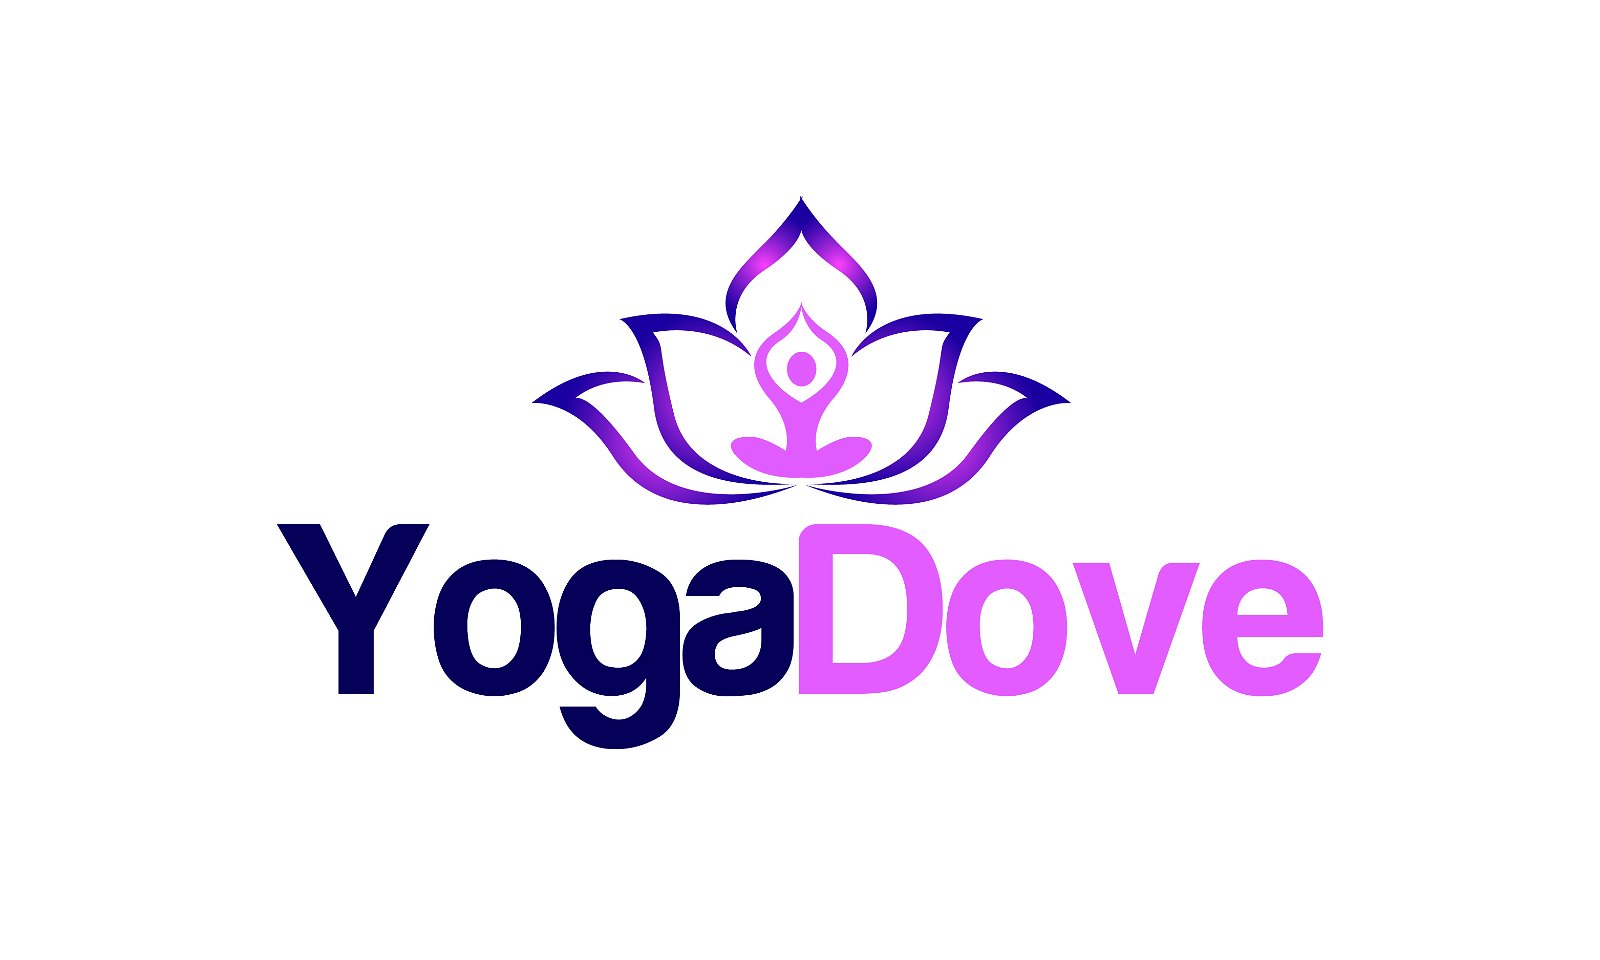 YogaDove.com - Creative brandable domain for sale